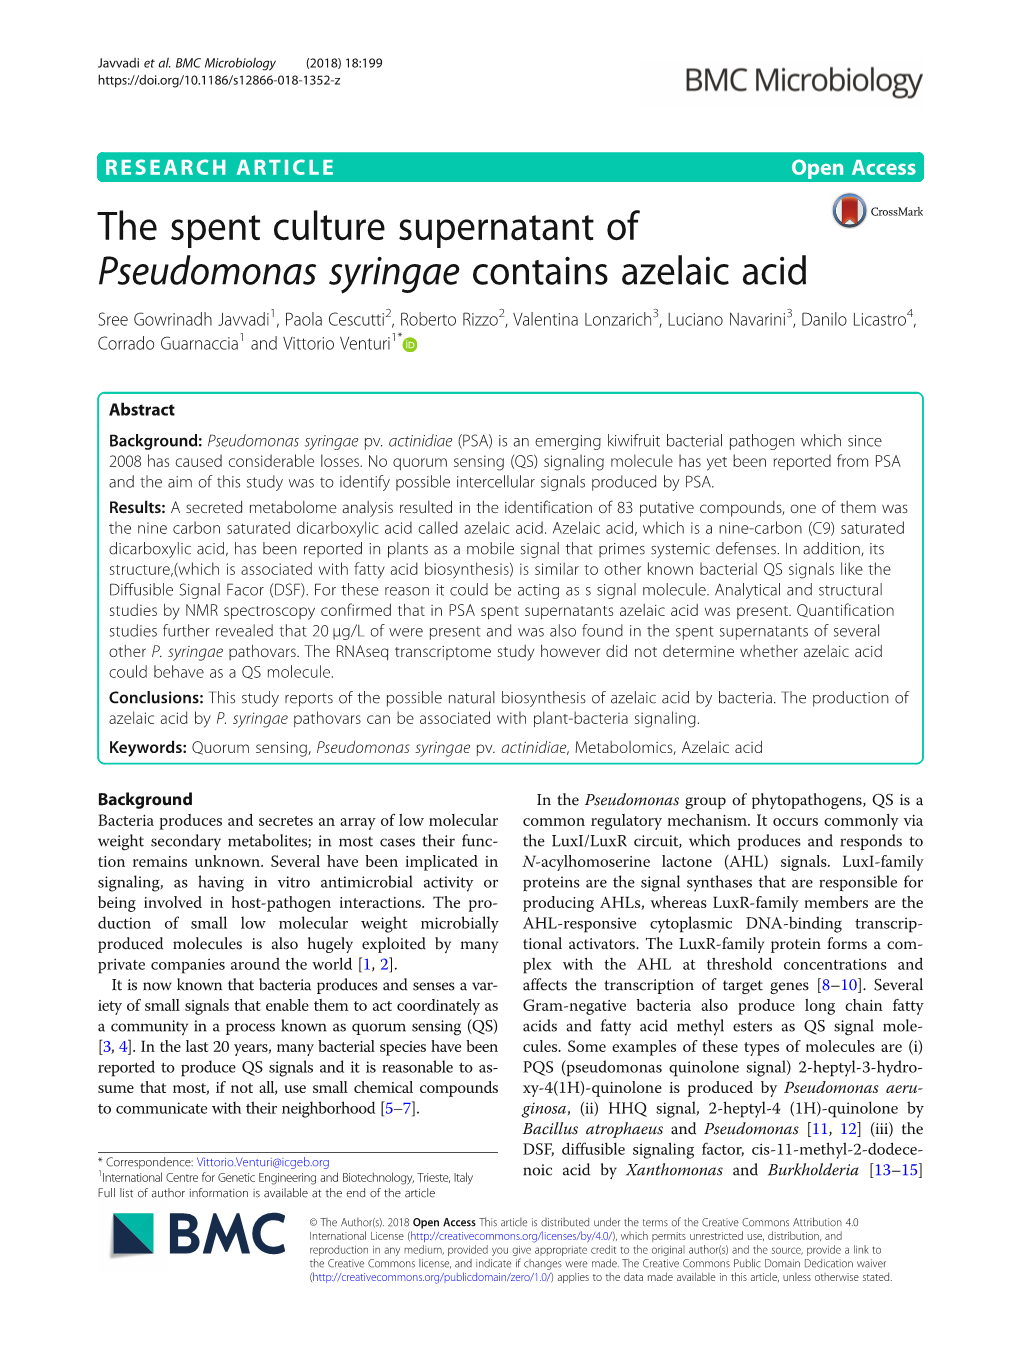 The Spent Culture Supernatant of Pseudomonas Syringae Contains Azelaic Acid